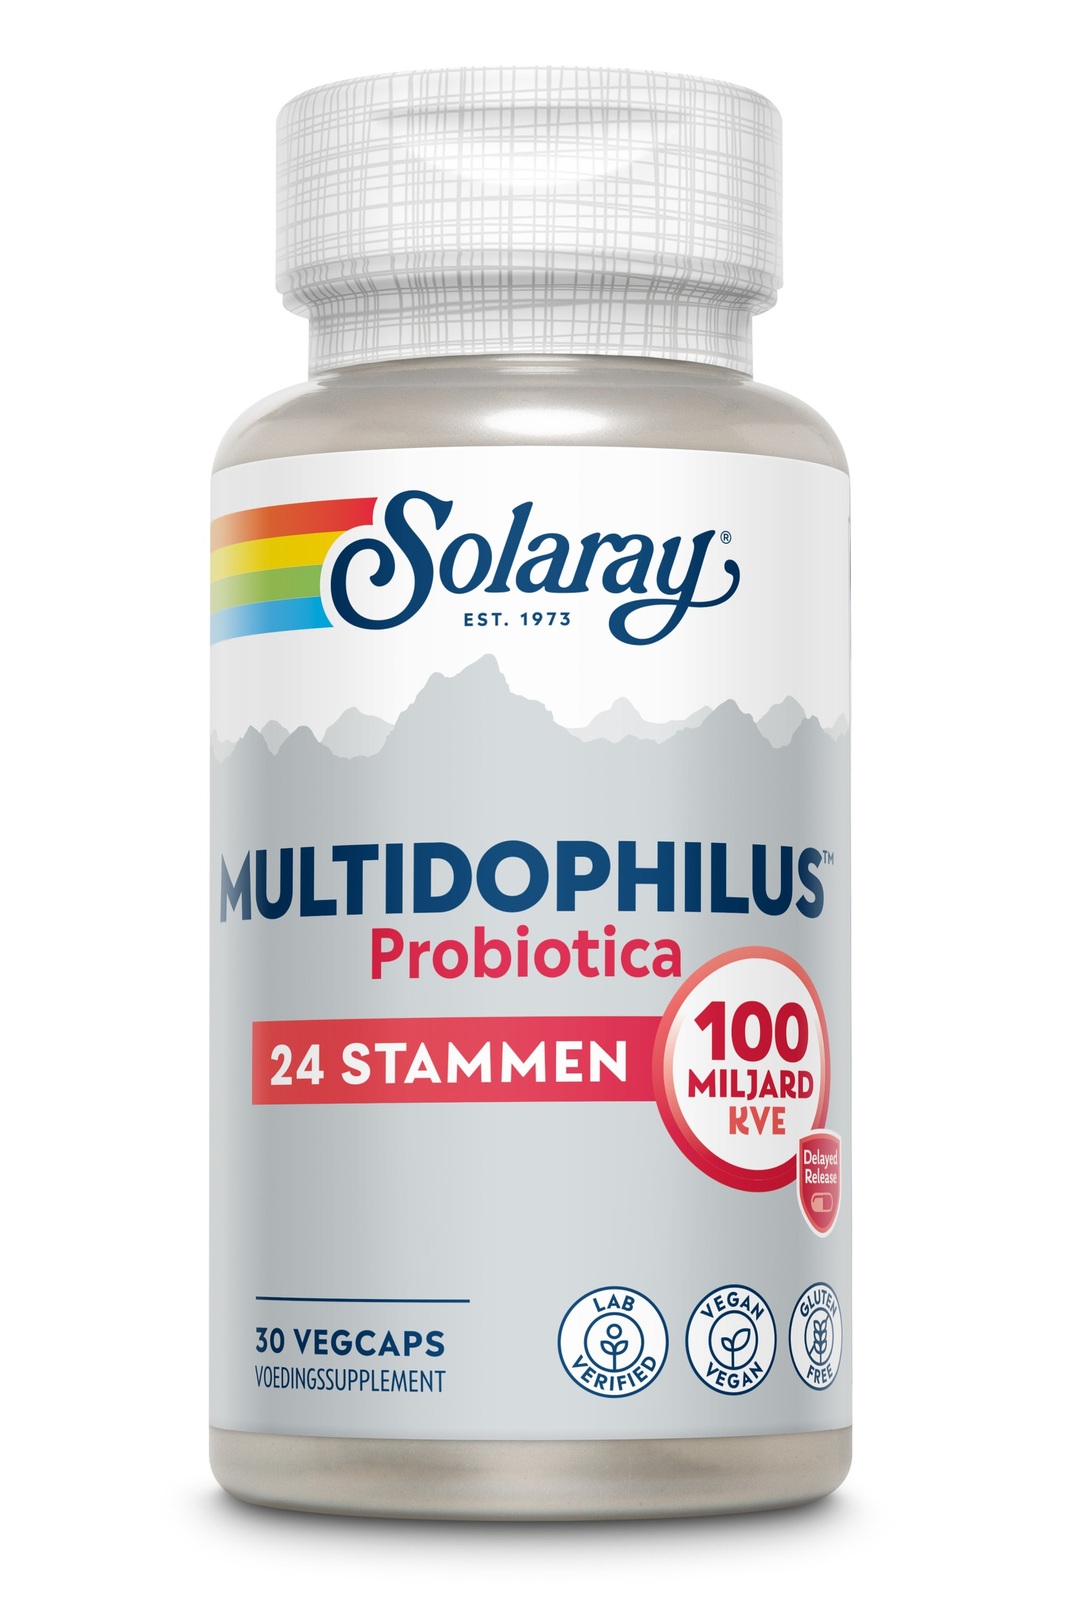 verklaren Ontvangende machine Terminal Solaray Multidophilus Probiotica 24 Stammen Vegcaps bestellen - Online  Boodschappen Bestellen